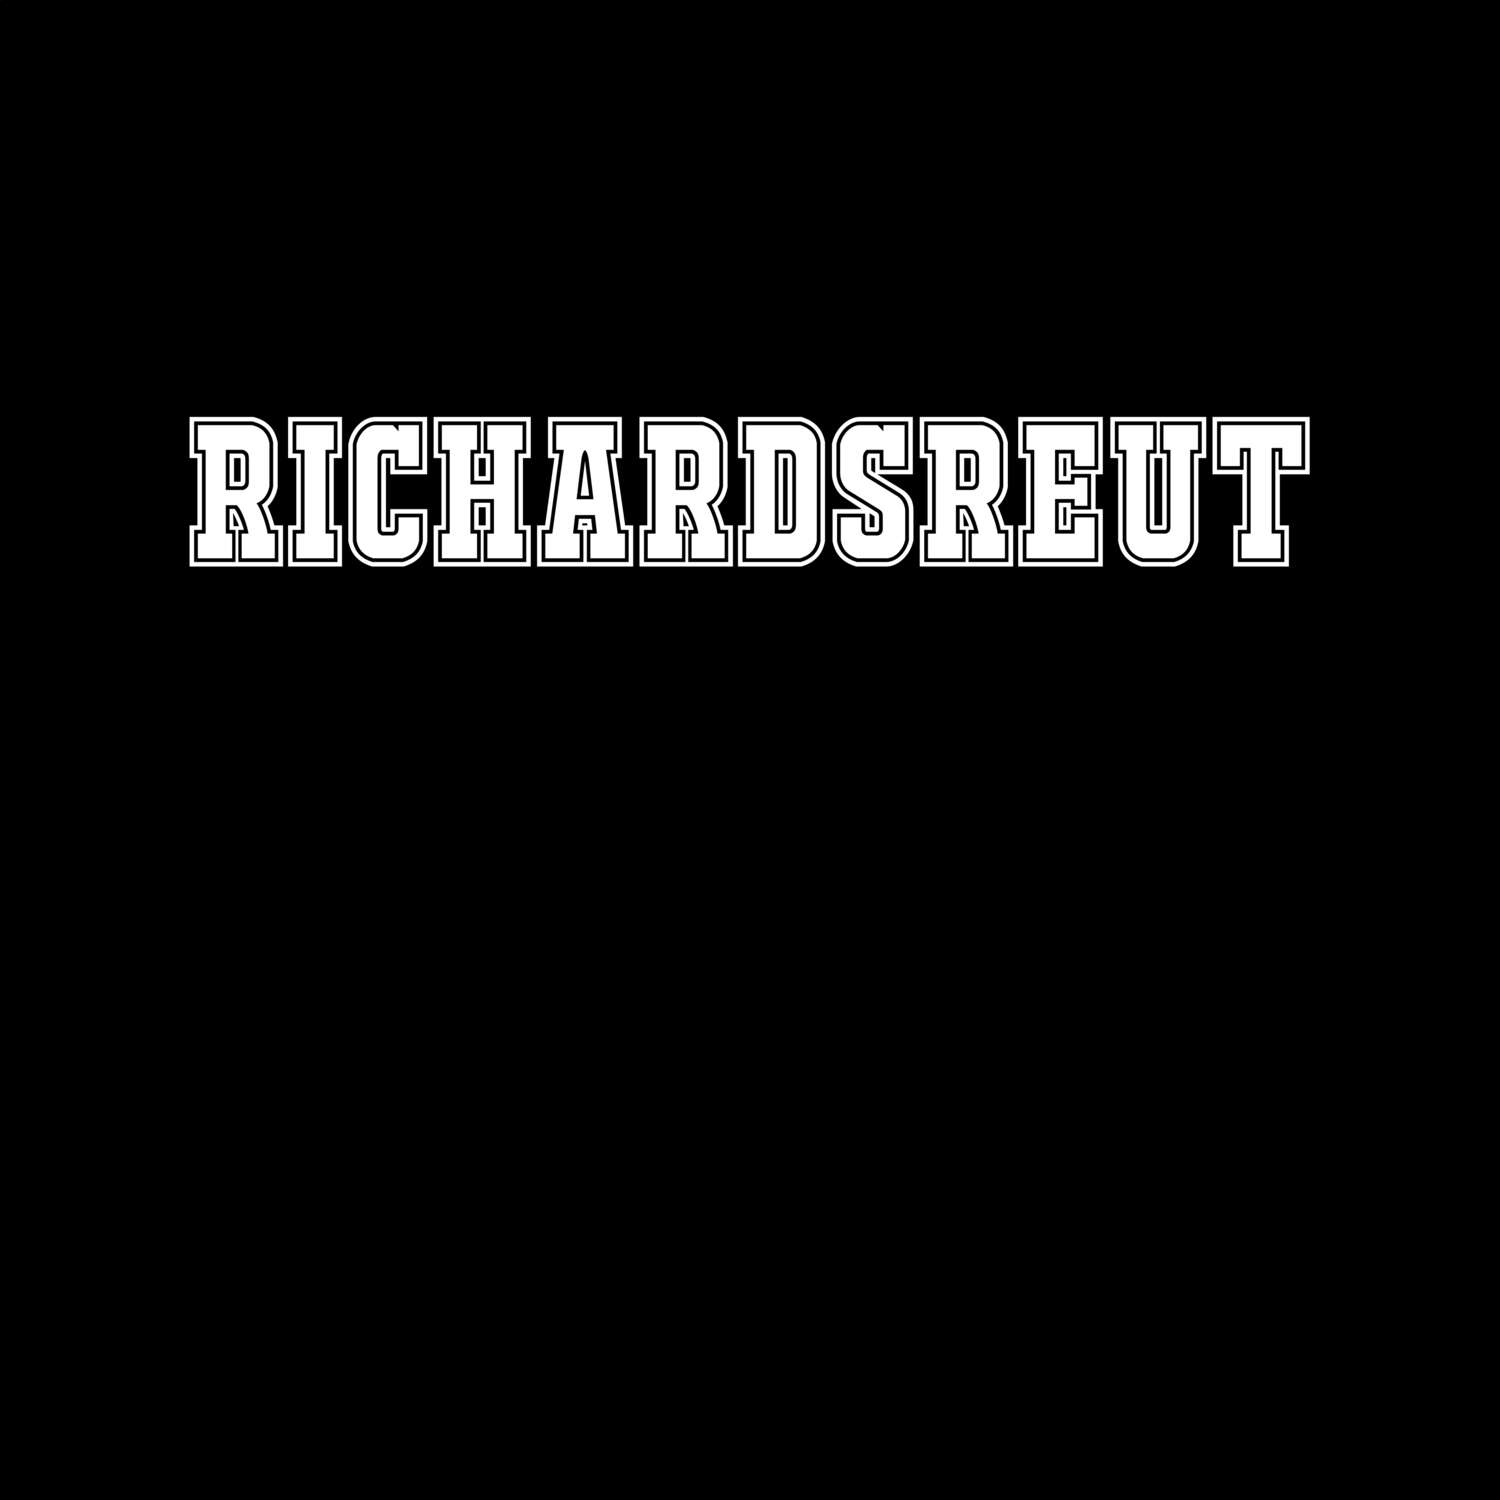 Richardsreut T-Shirt »Classic«